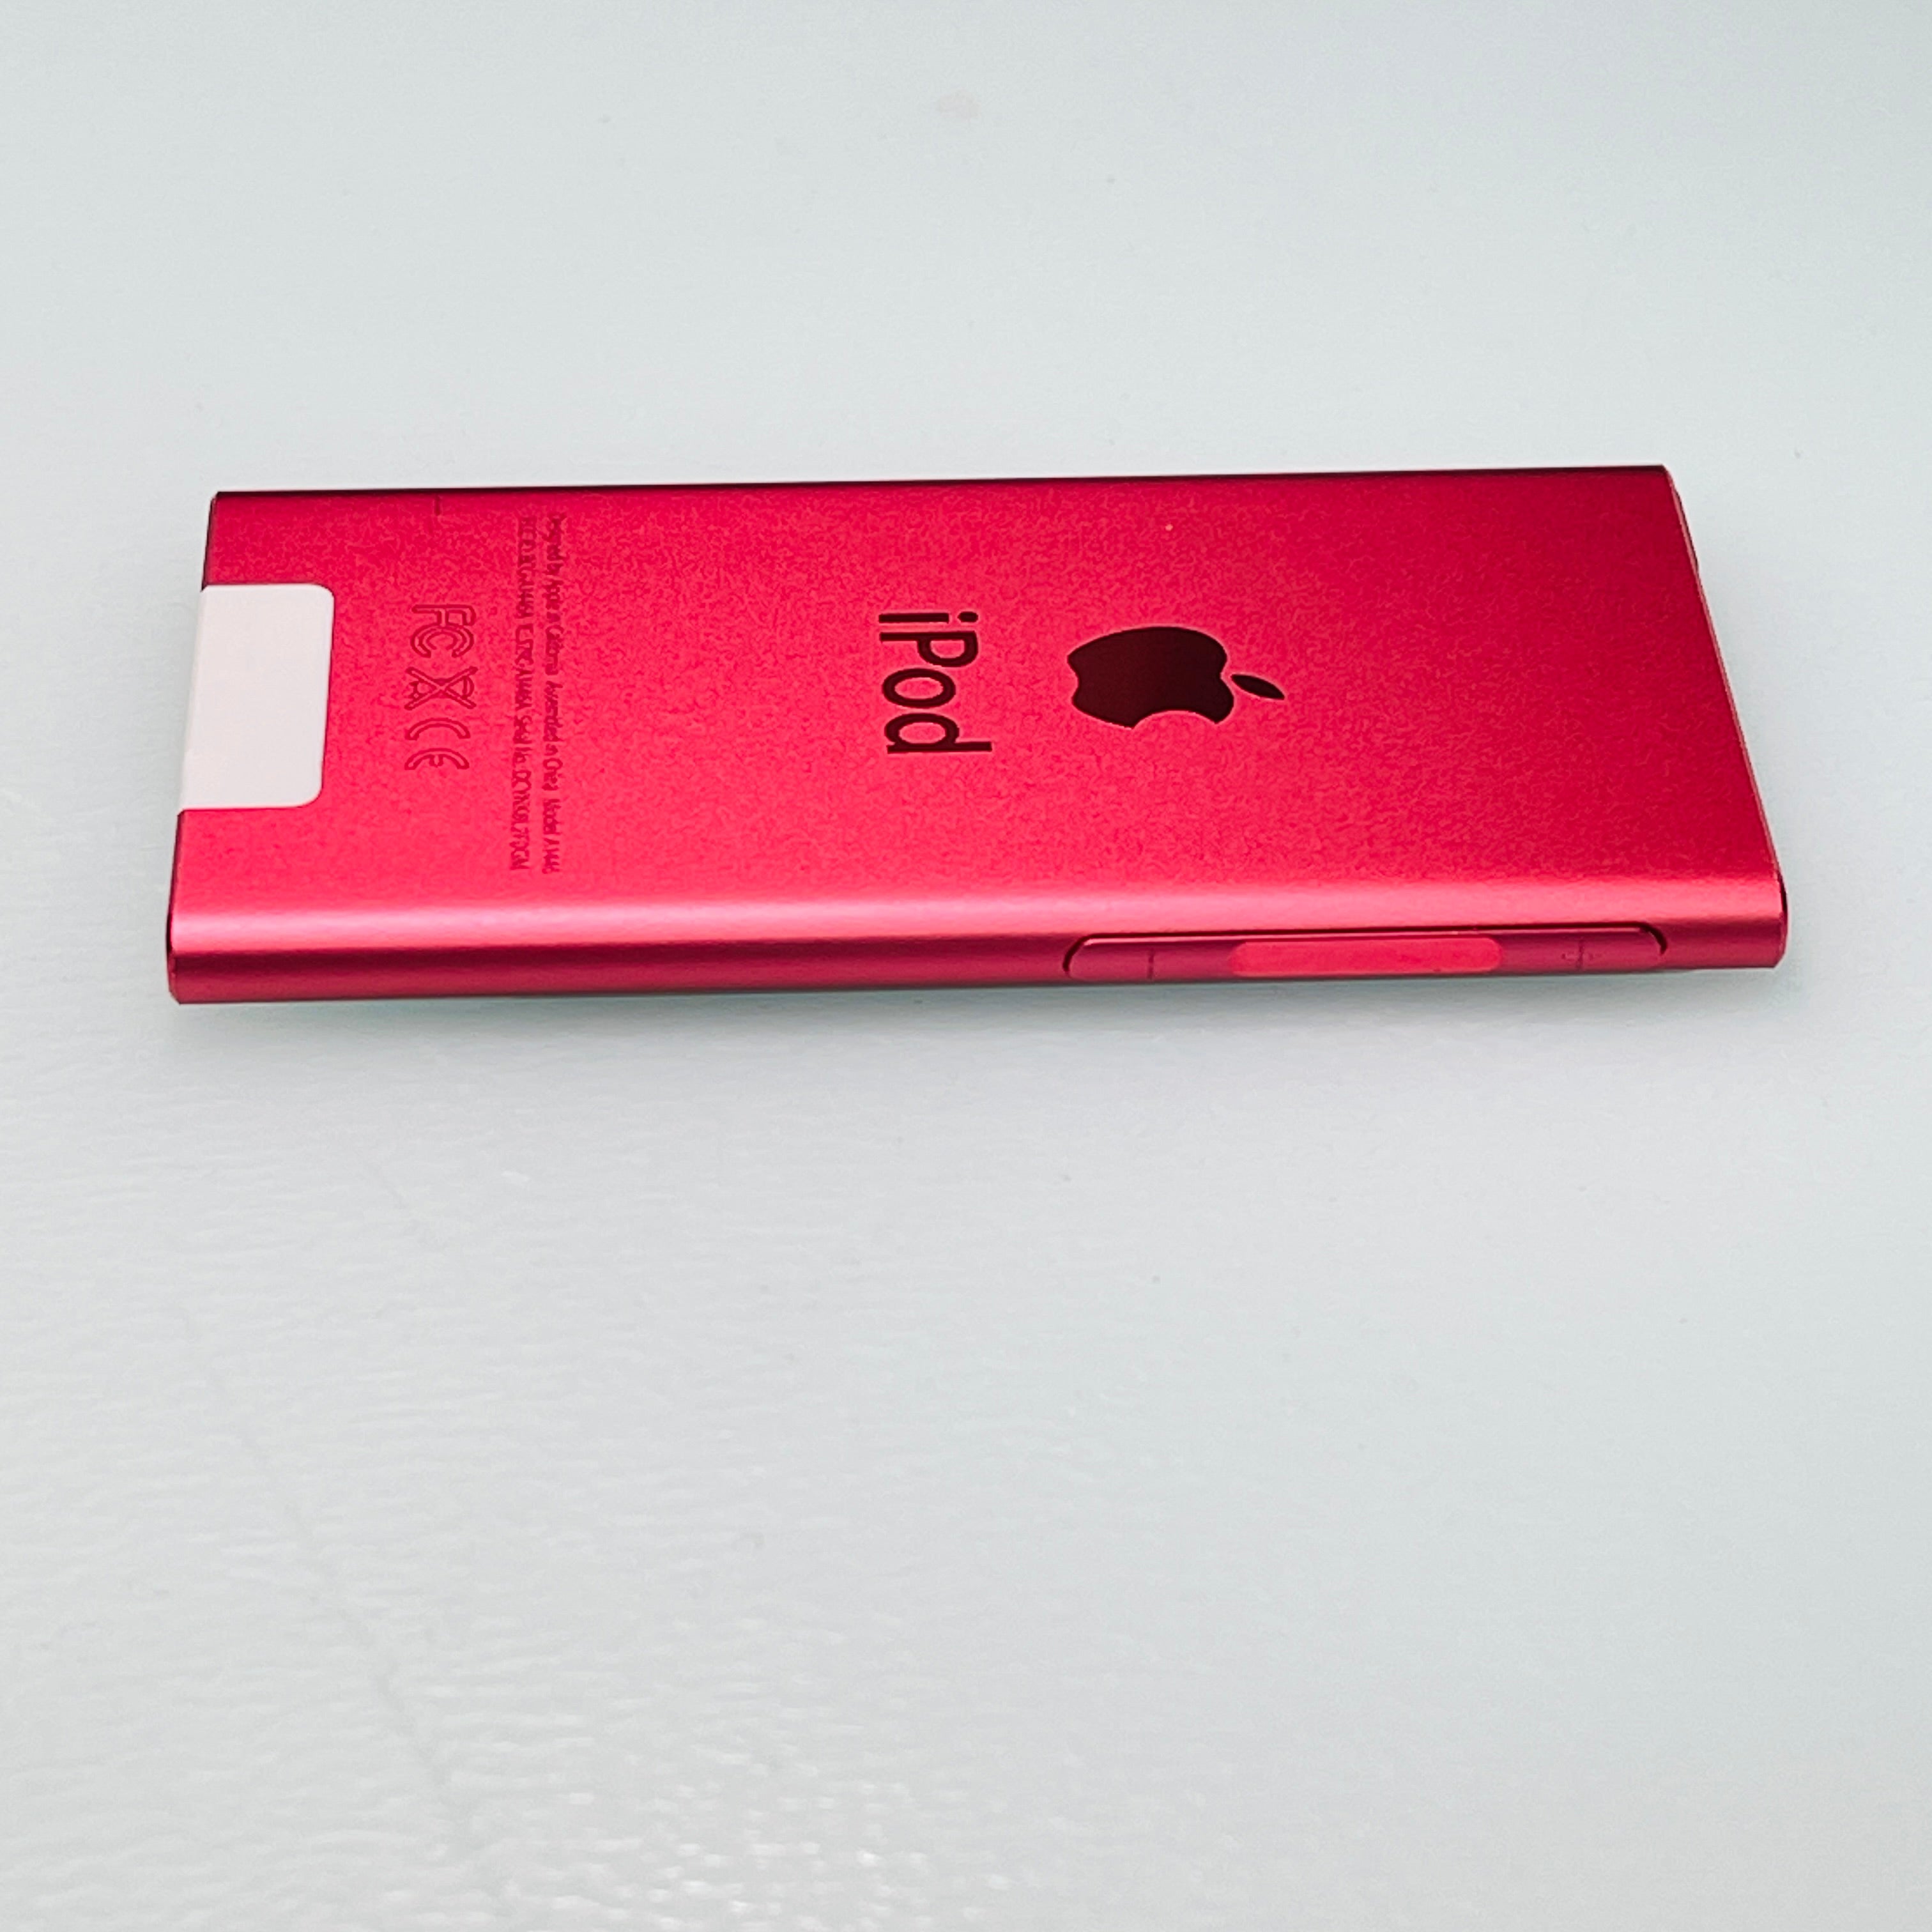 Apple iPod nano - 16GB - 16GB - Pink